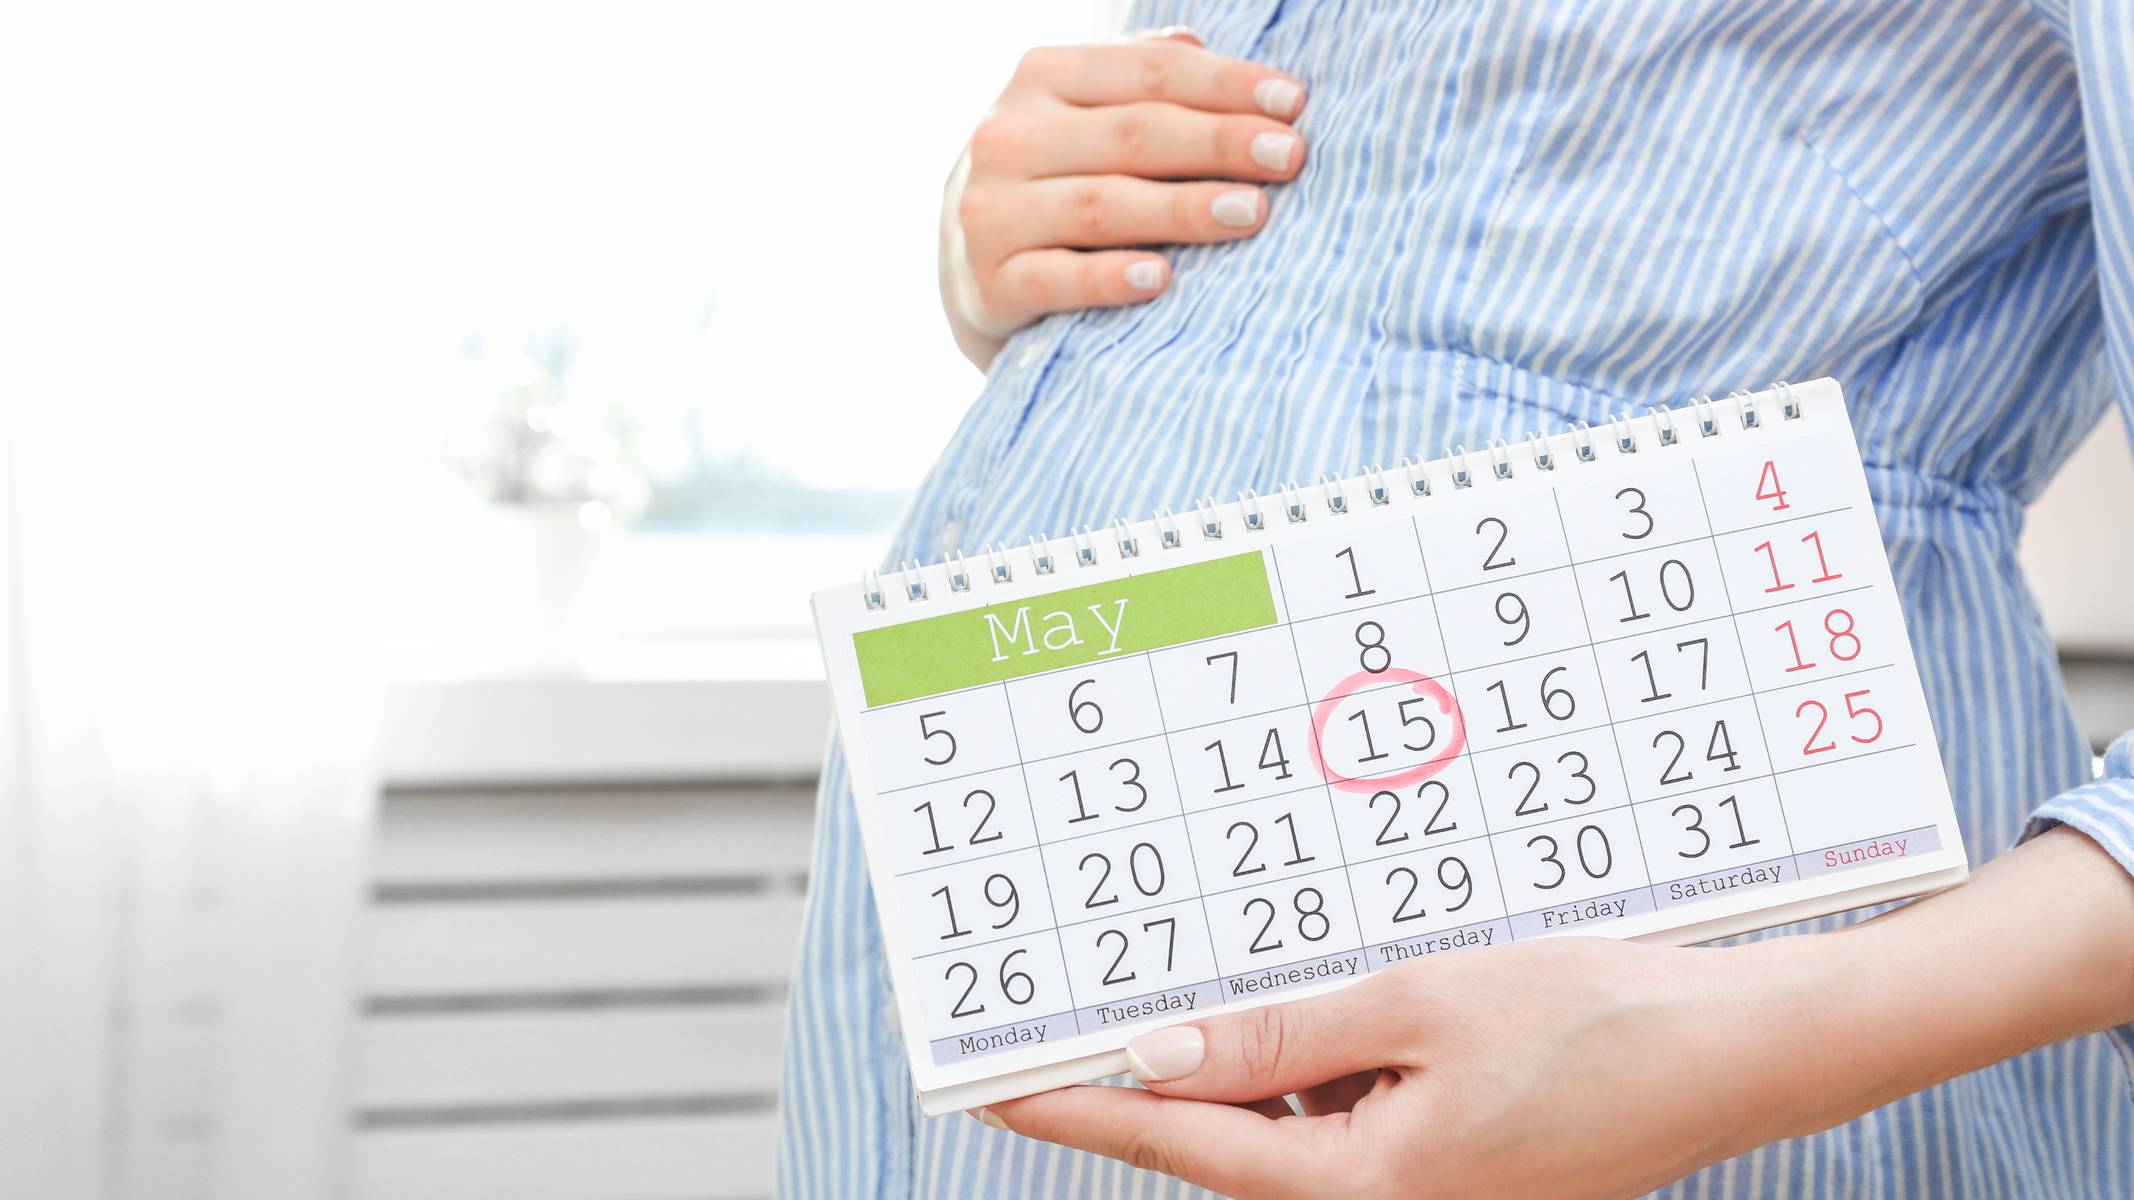 Предполагаемая дата зачатия. Календарь беременности. Календарь по беременности. Предполагаемая Дата родов.